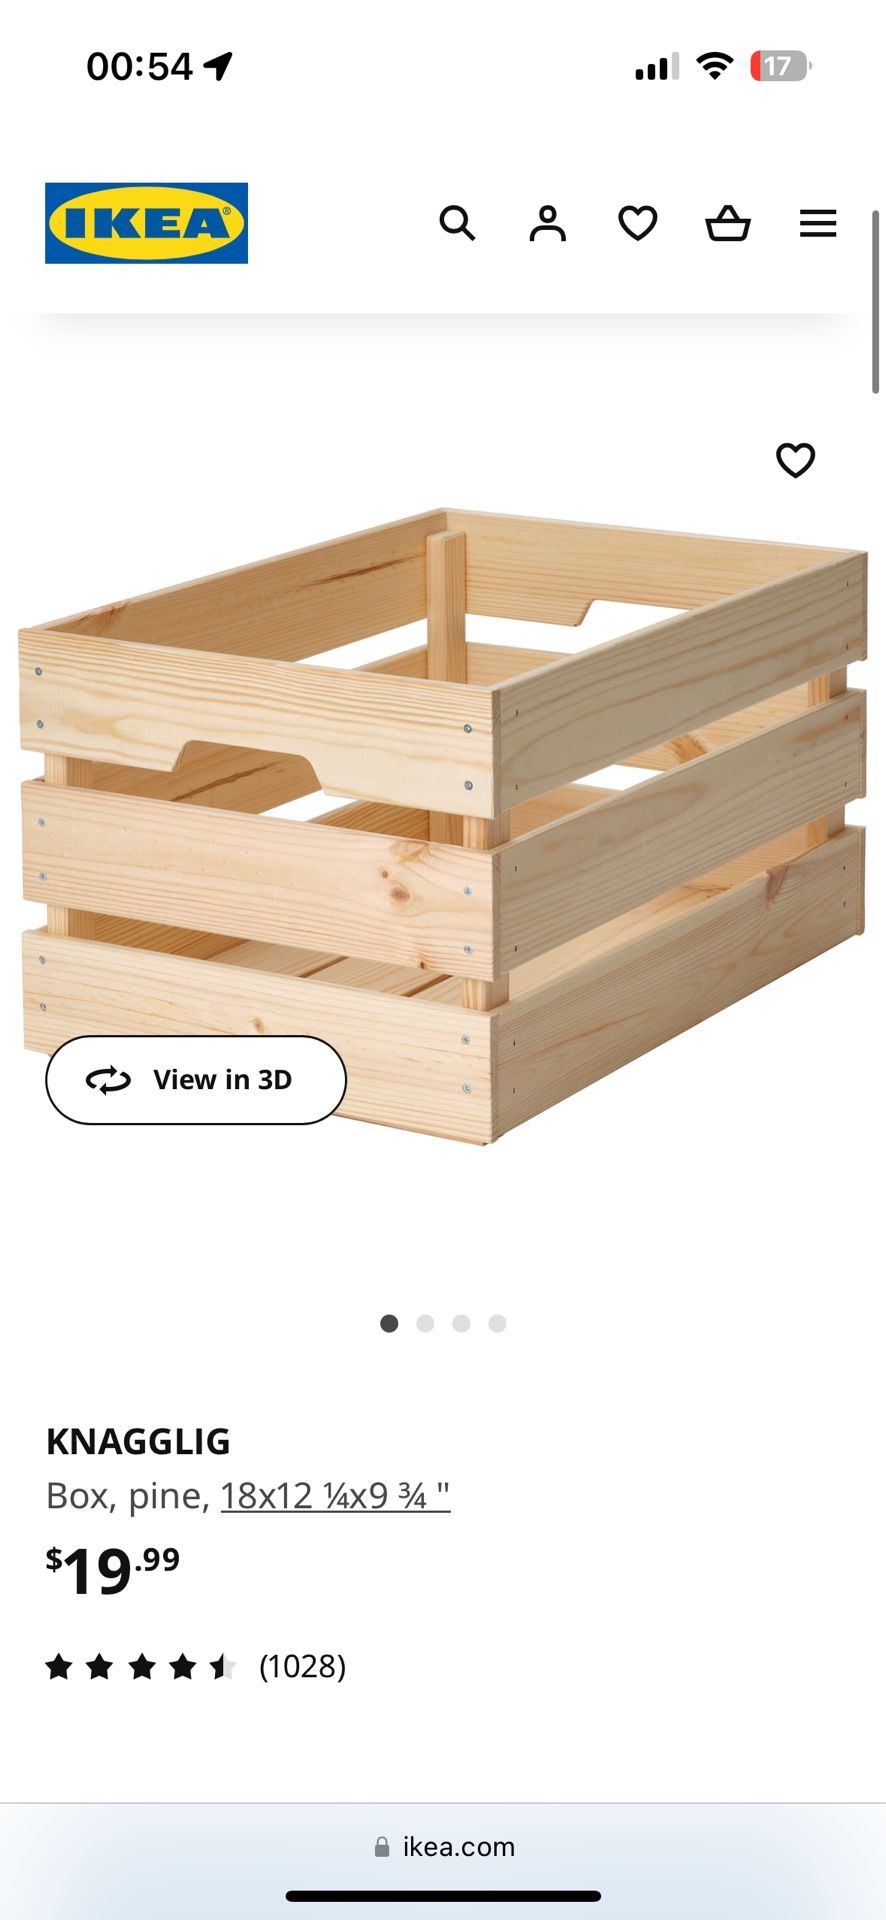 IKEA Knagglig Pine Crates 